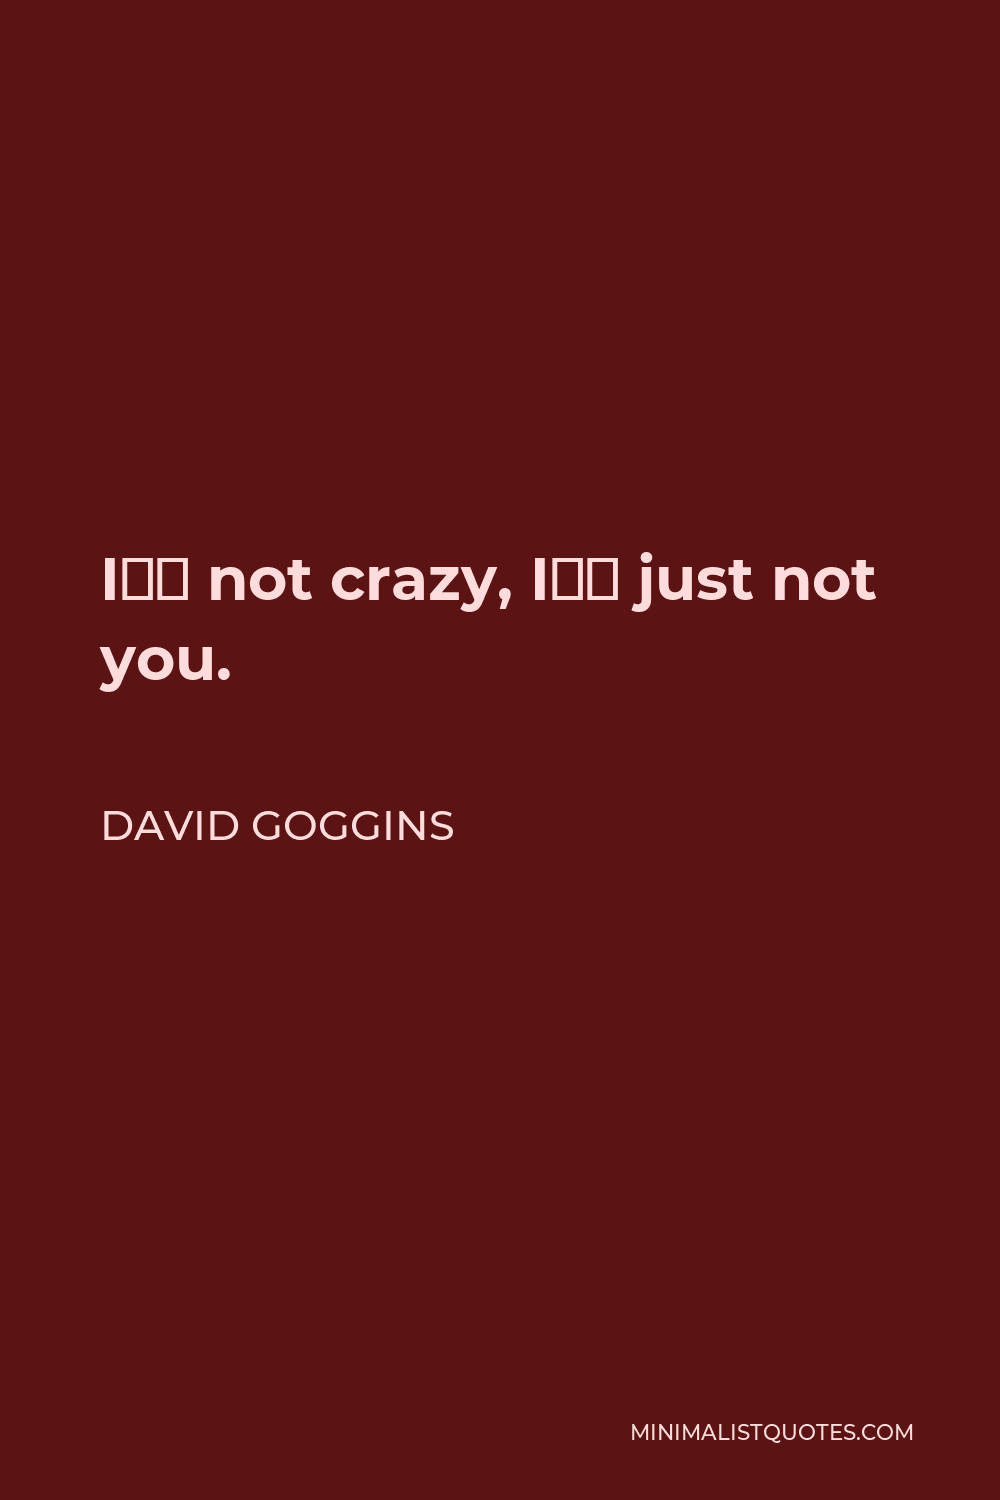 David Goggins Quote: I'm not crazy, I'm just not you.